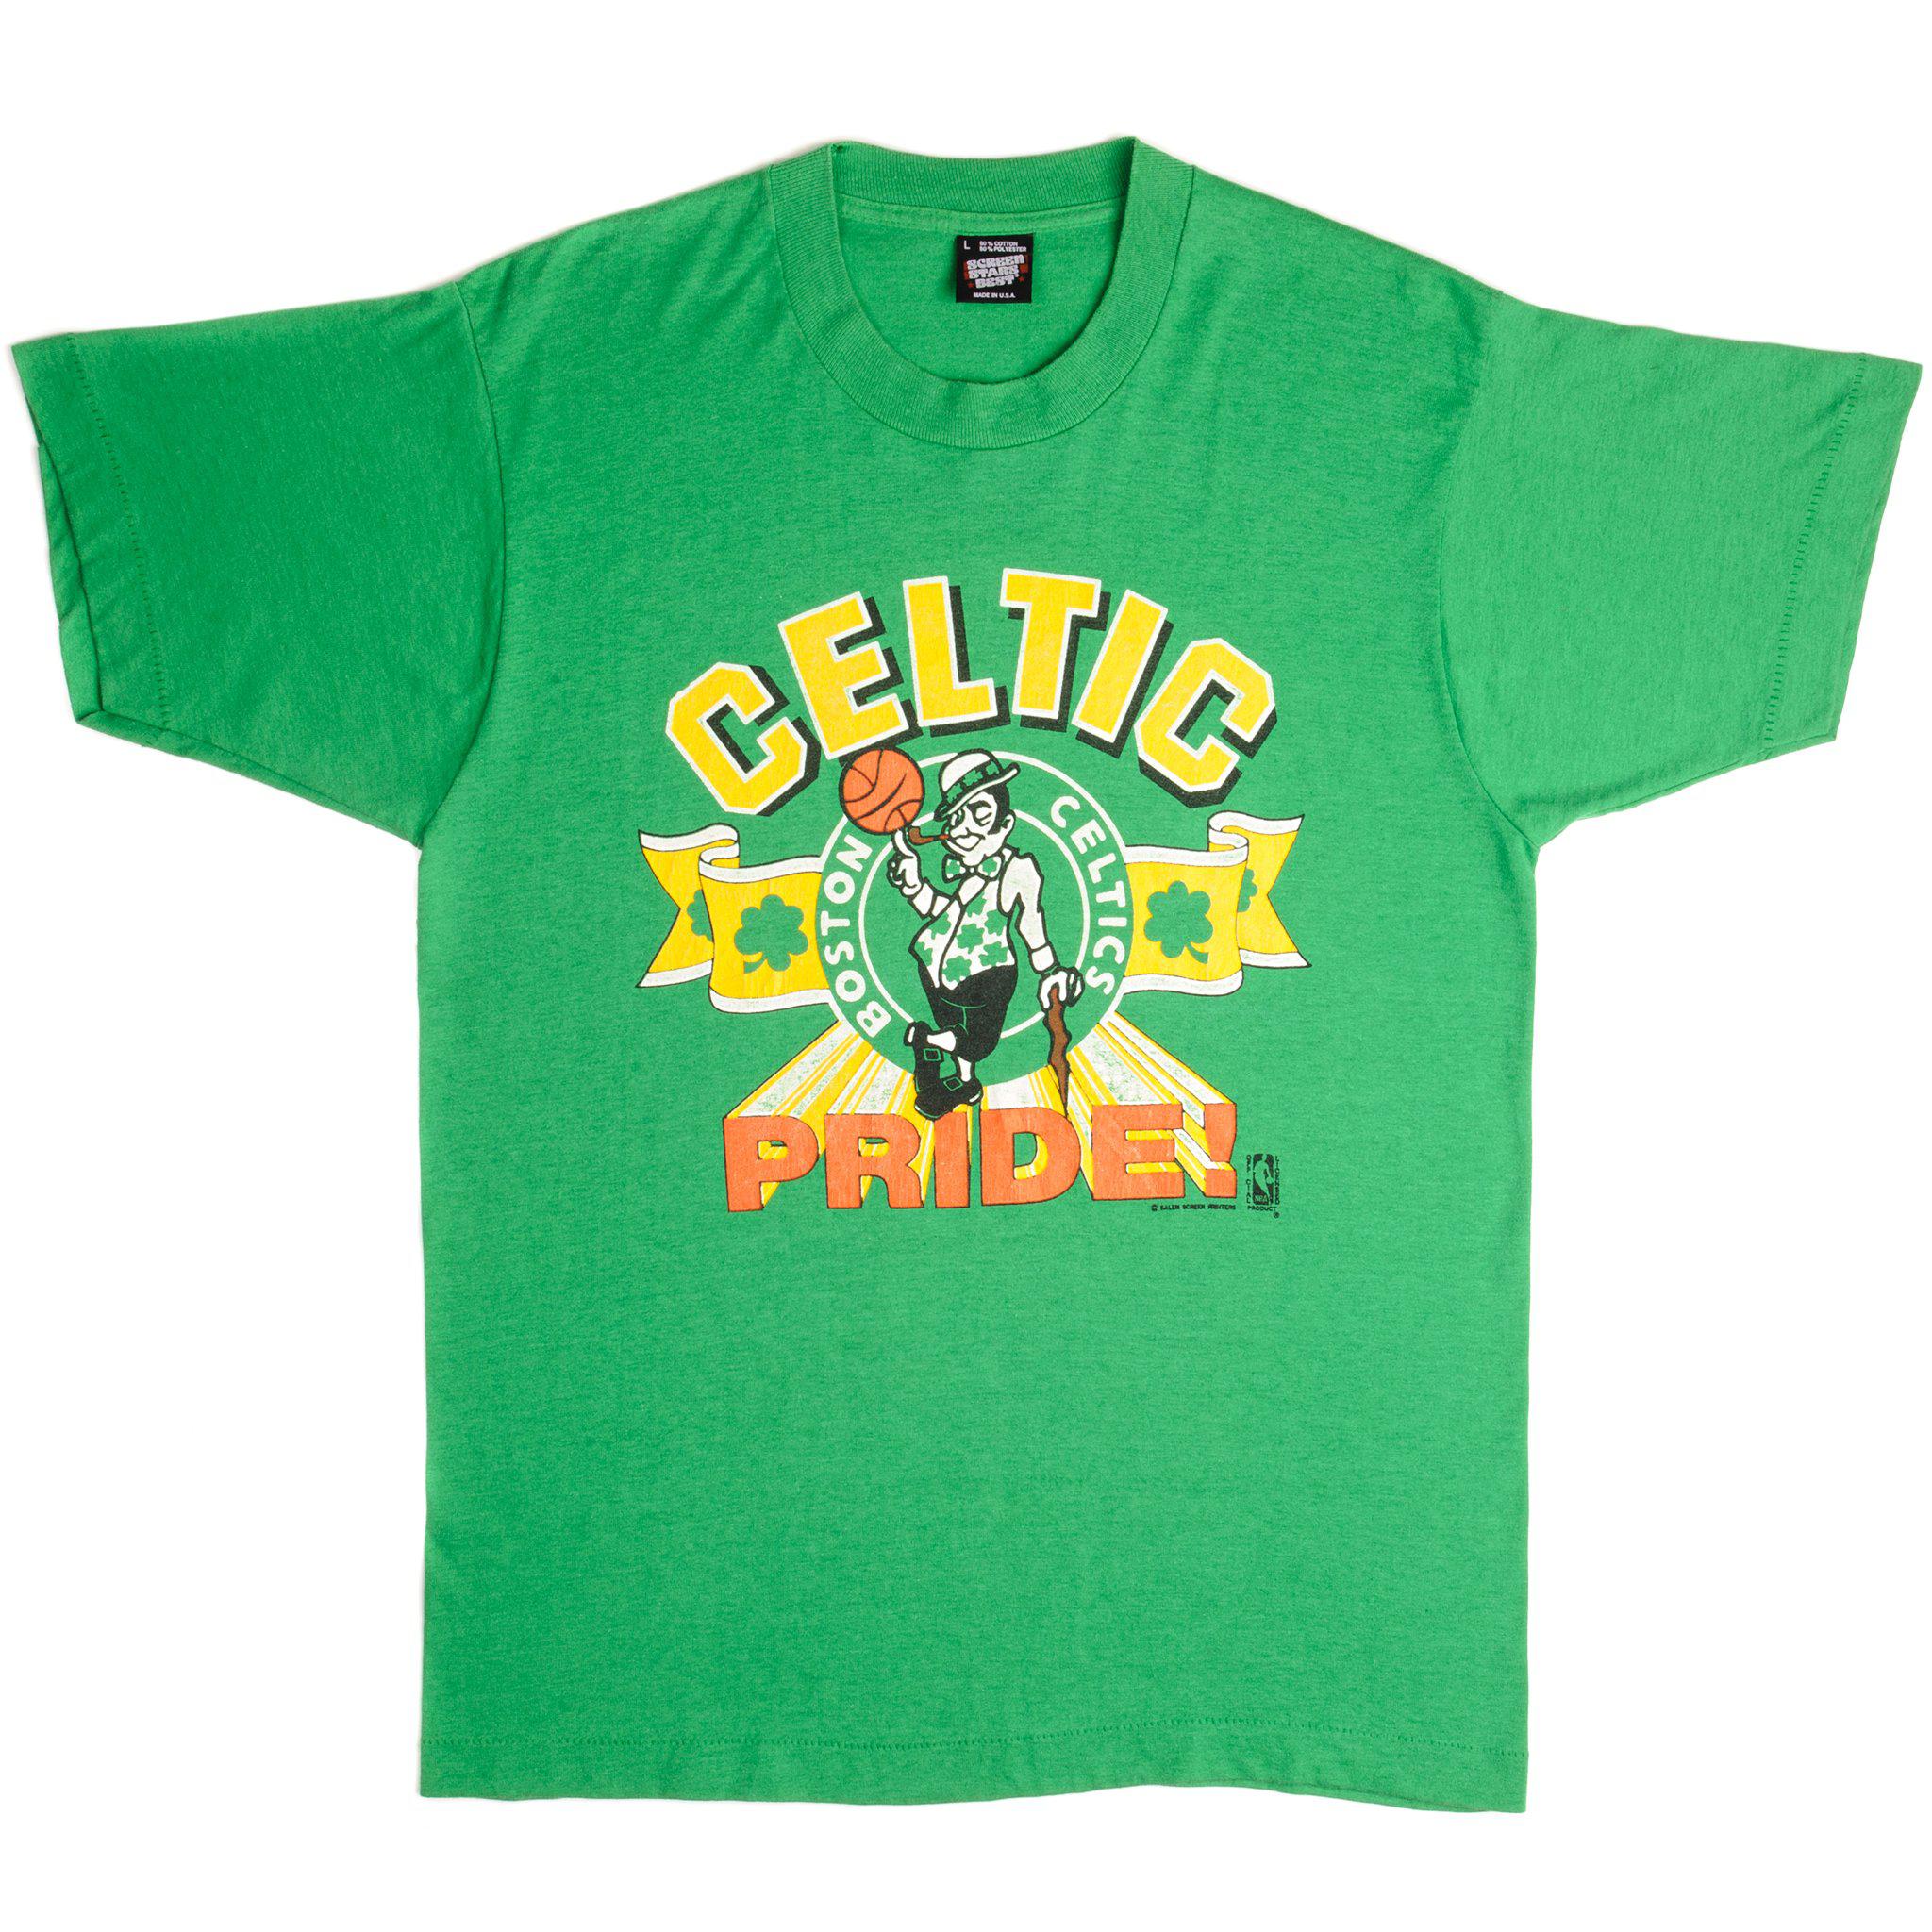 1986 Boston Celtics Tee size L (21.5x27.5) for $80 available now!  #whatsgoodvintage